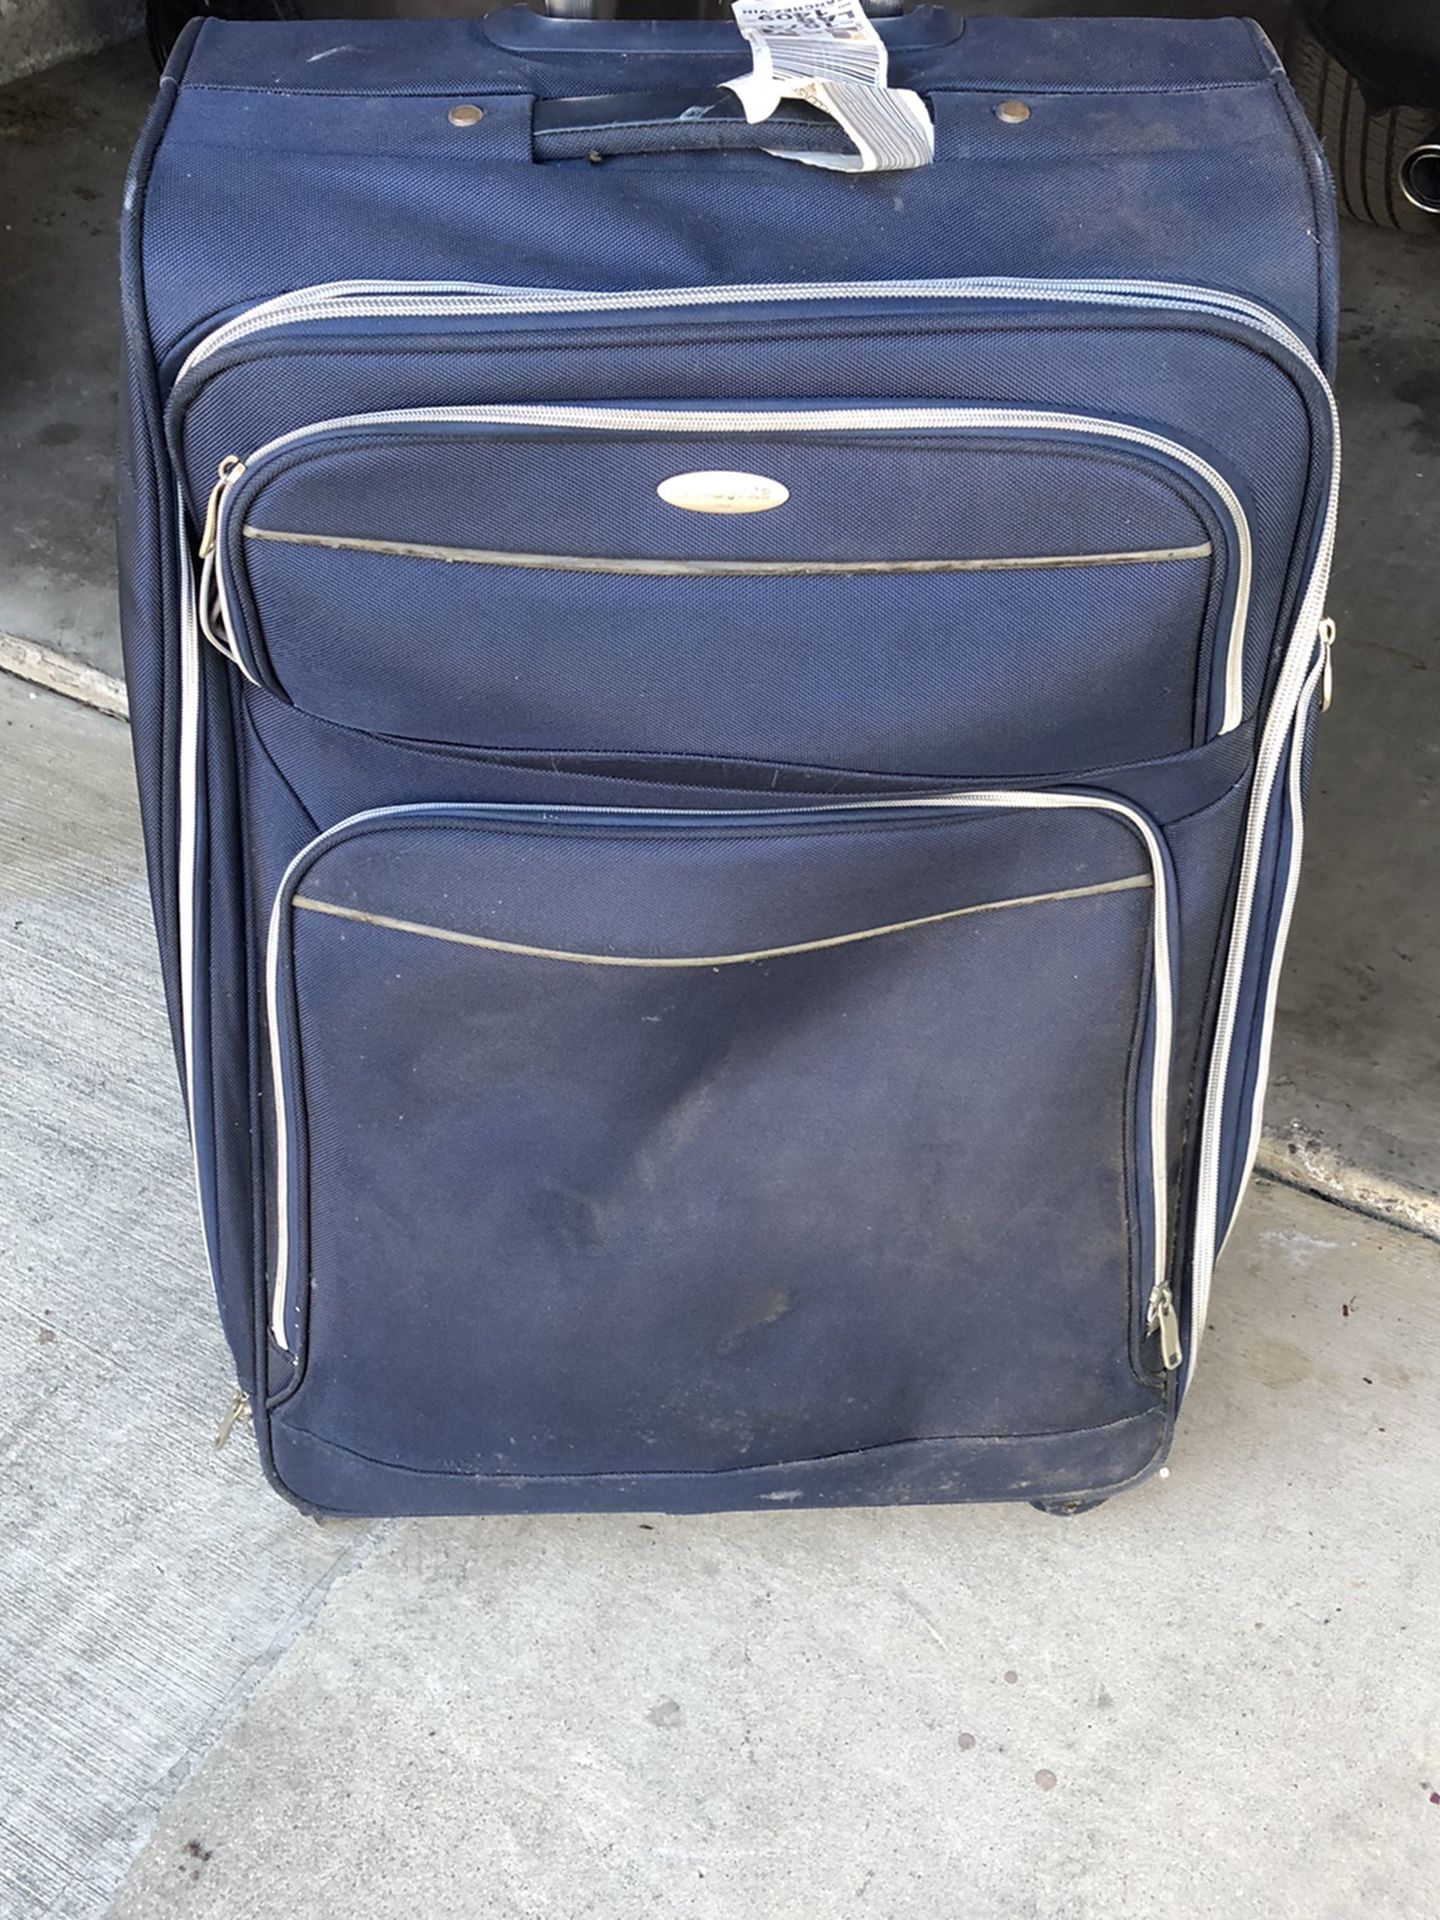 Samsonite luggage with handle no tears or rips